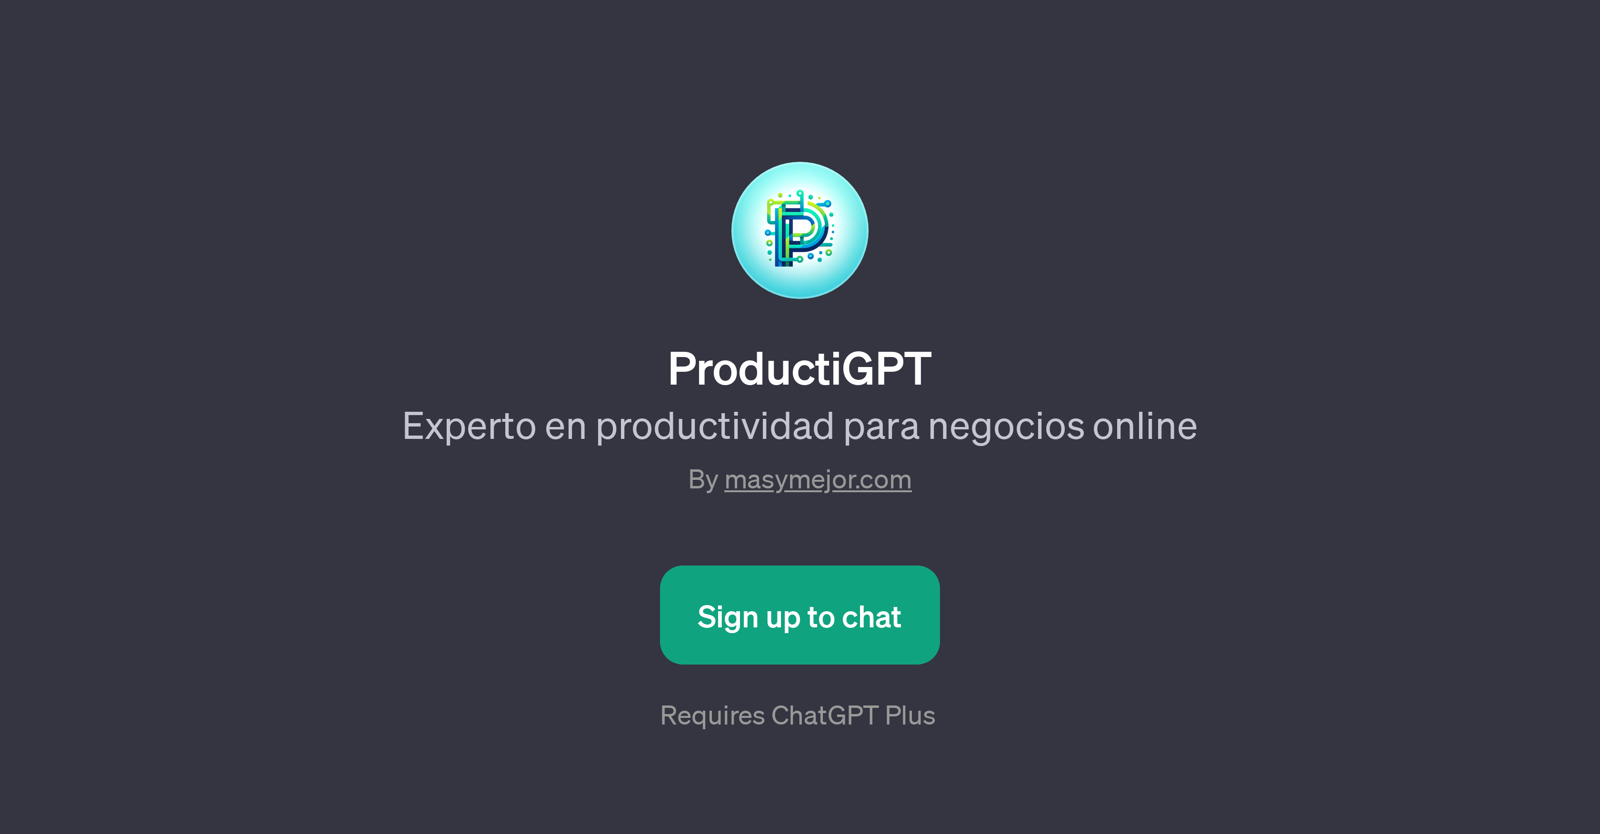 ProductiGPT website